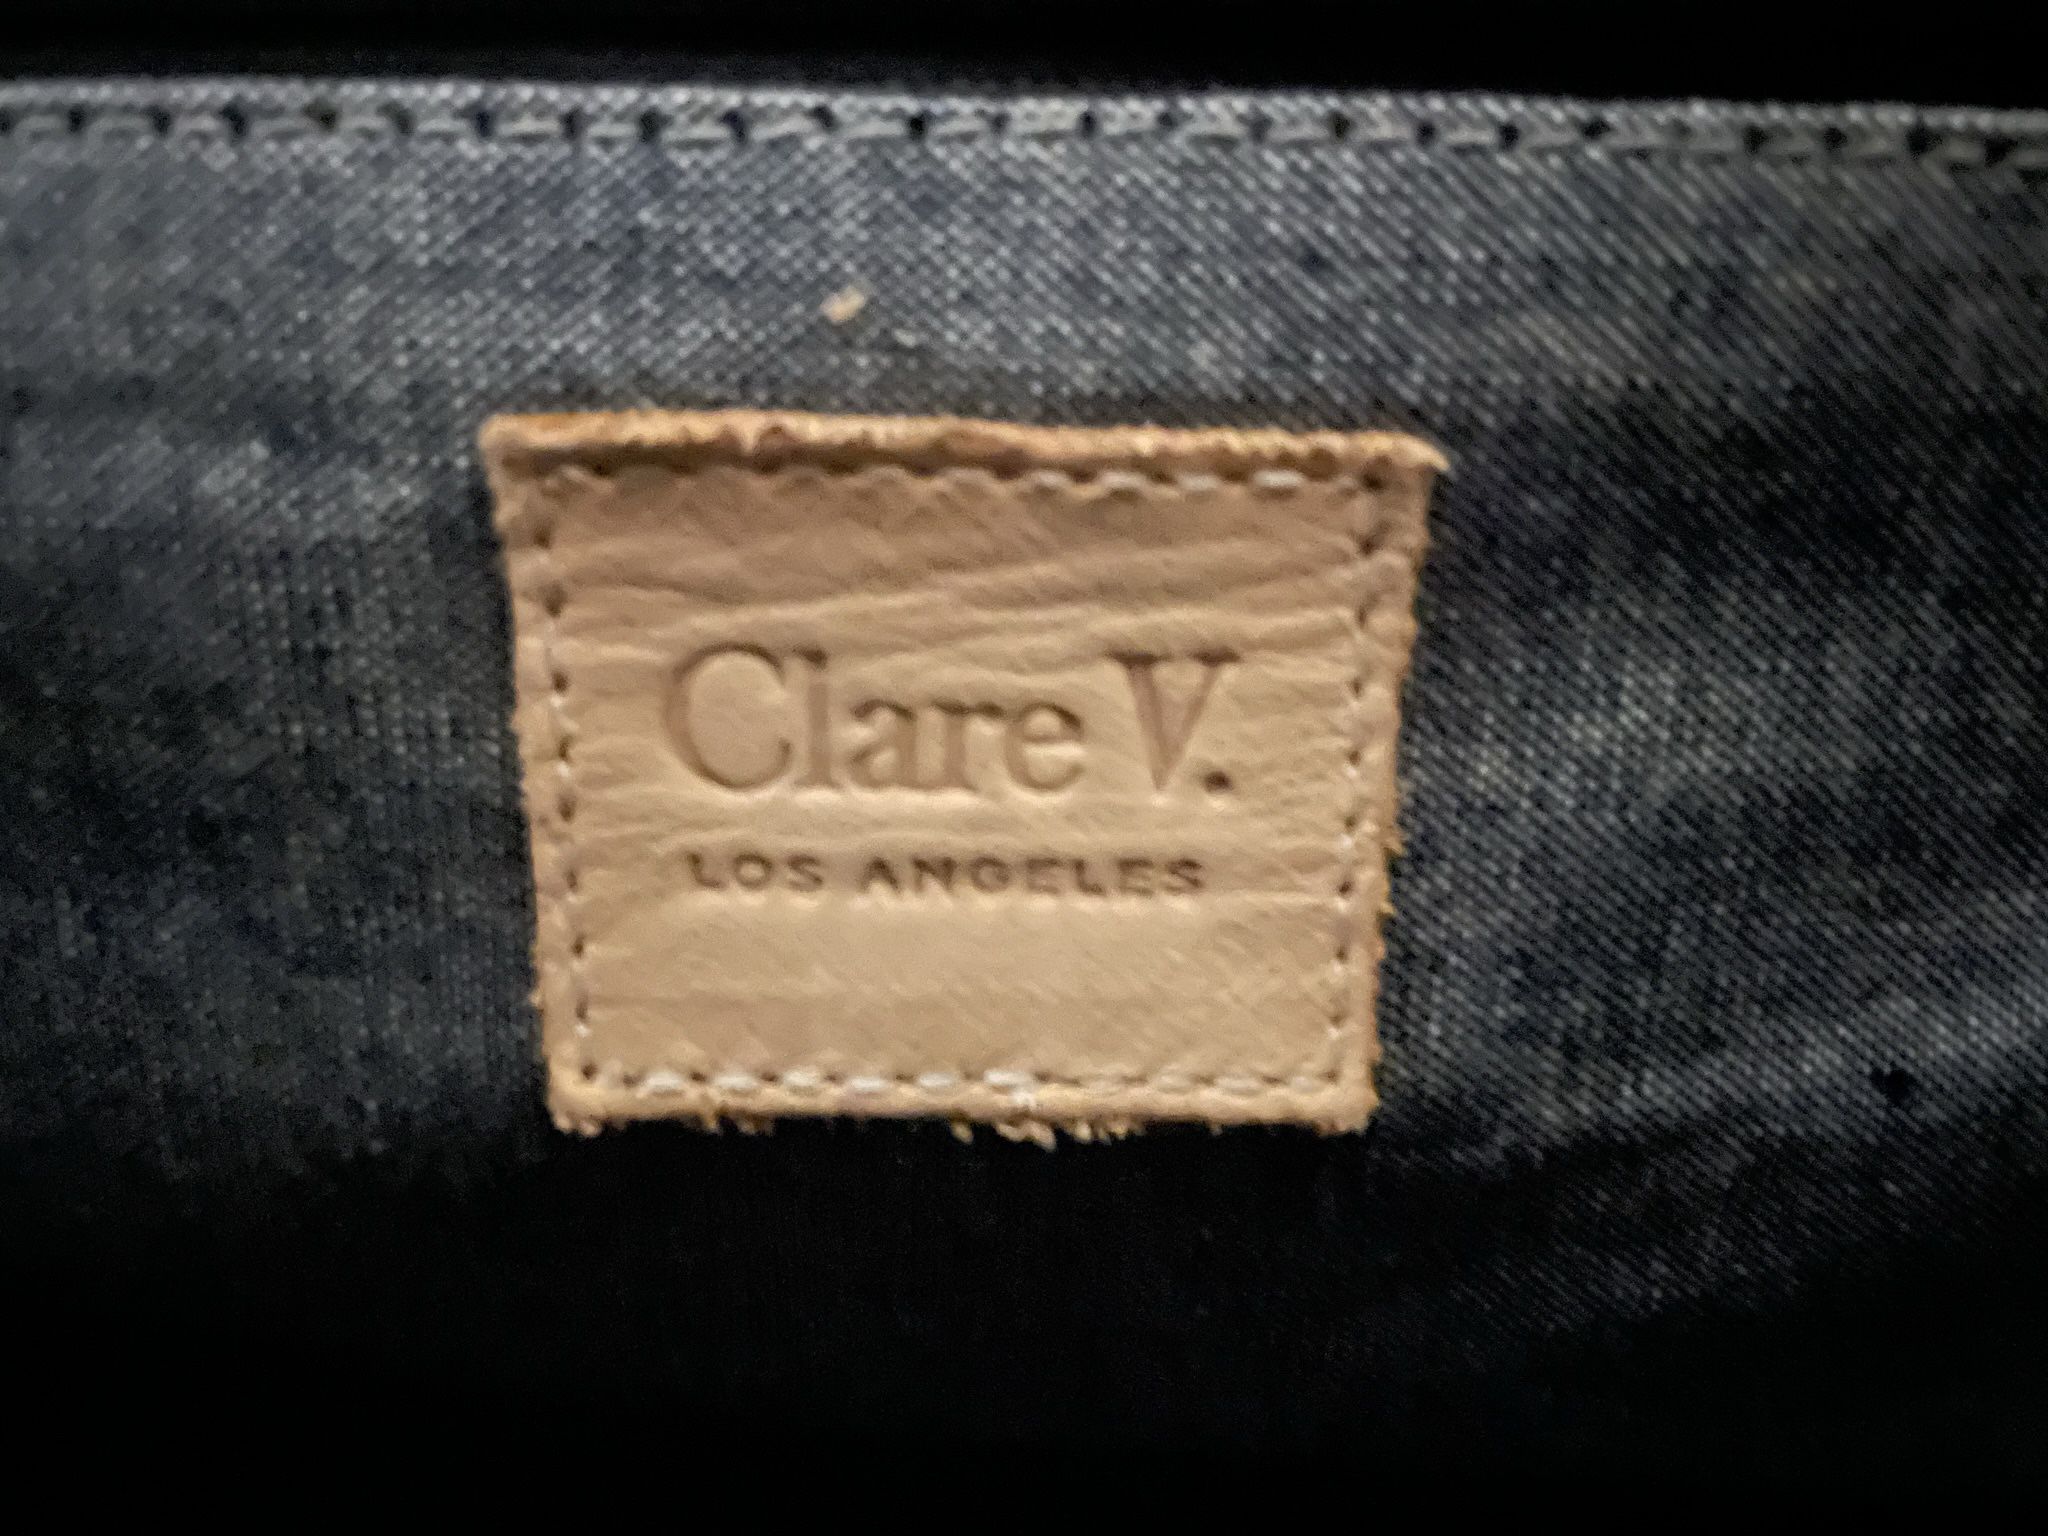 Clare V Bag for Sale in El Segundo, CA - OfferUp